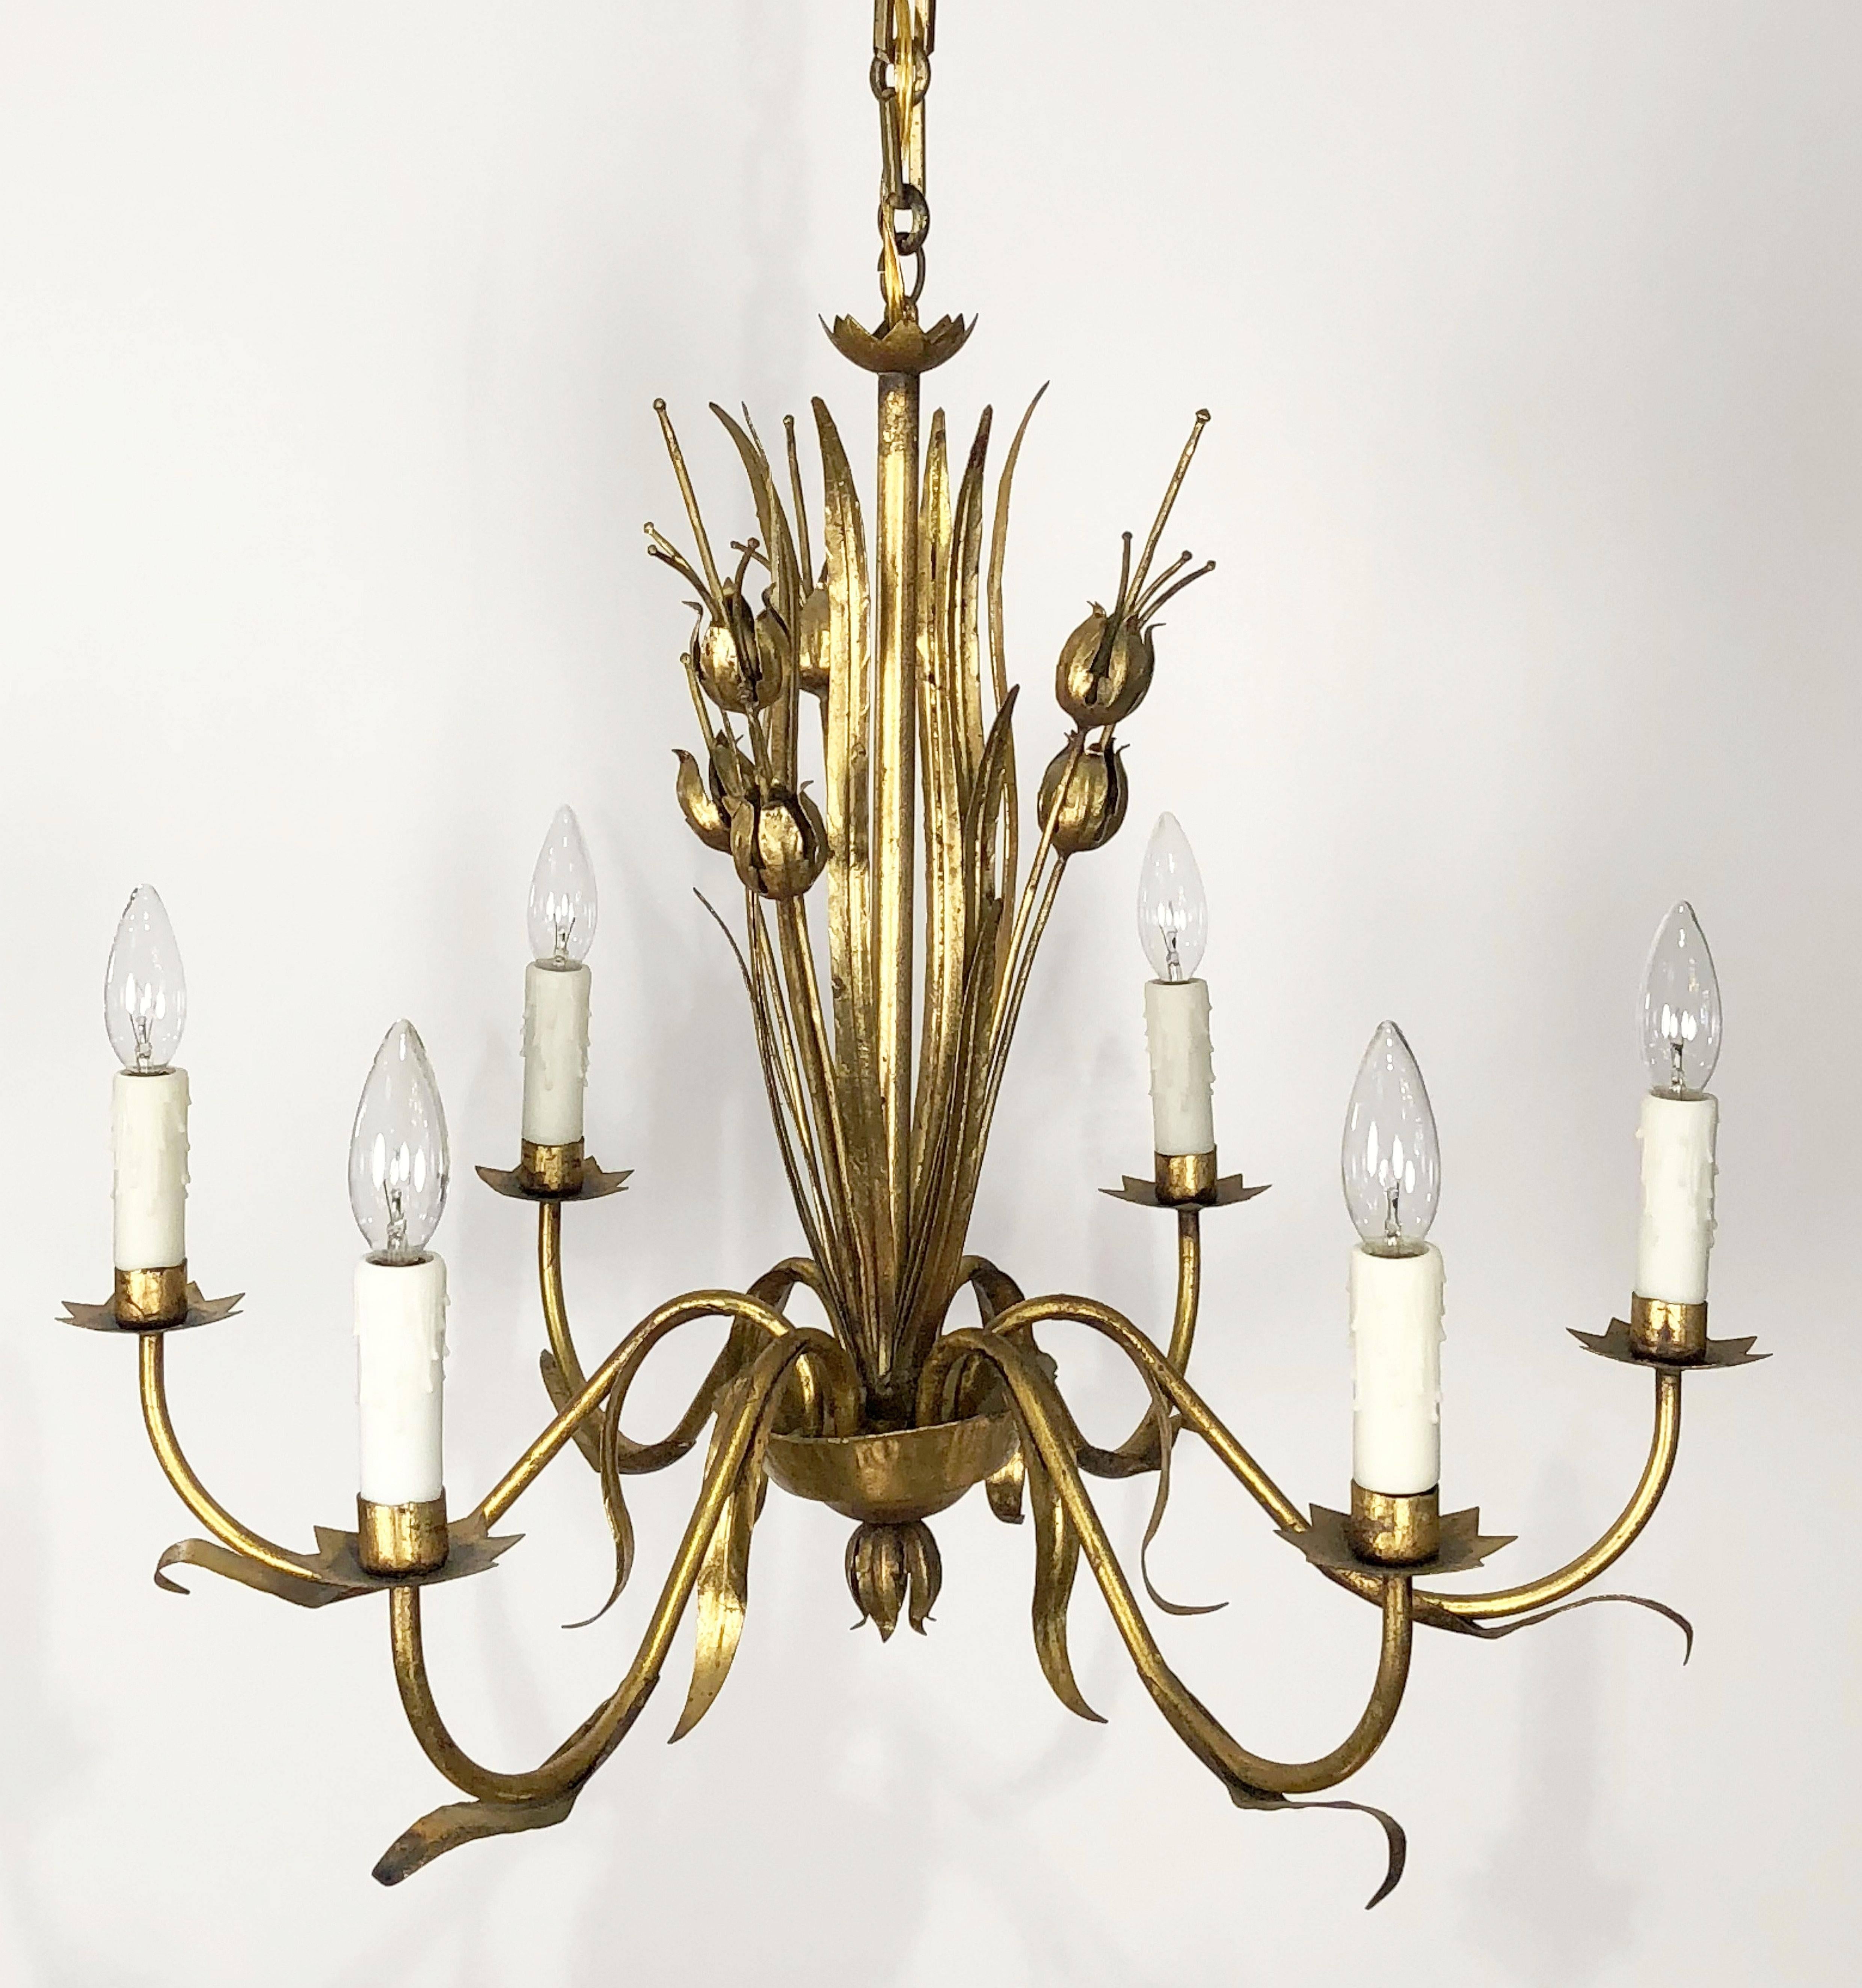 A handsome Italian six-light hanging light fixture or chandelier (26